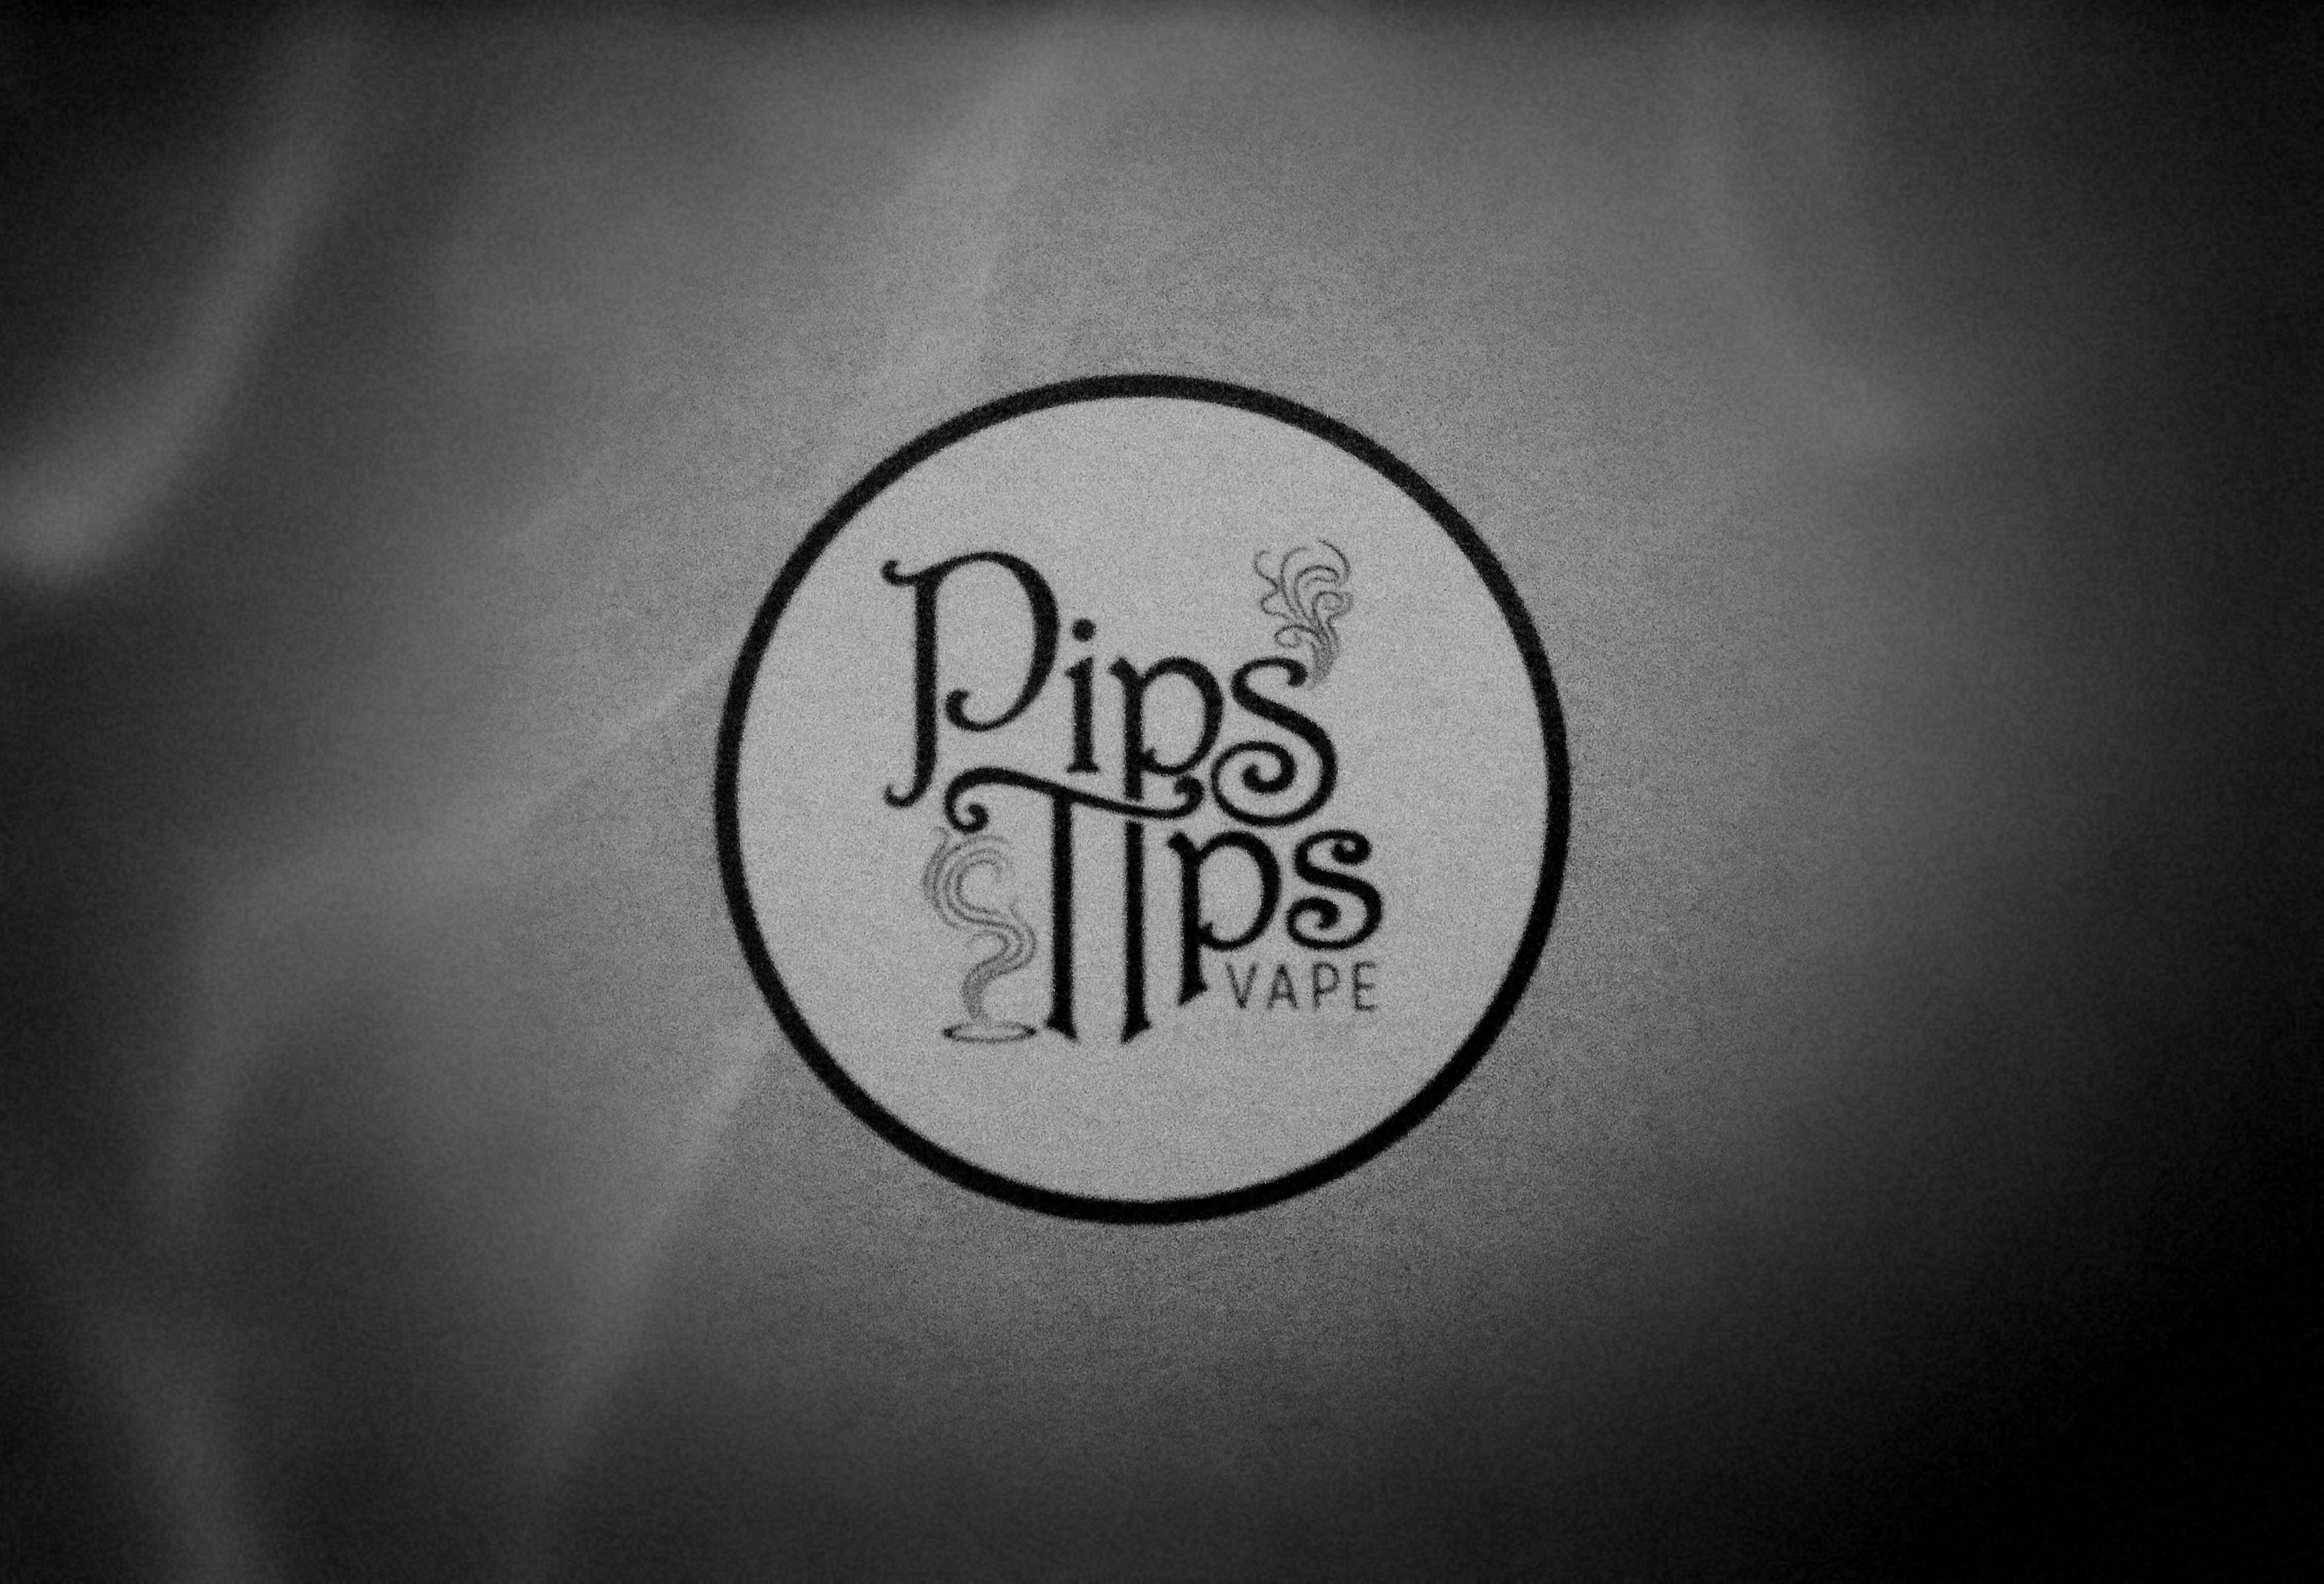 Pips Tips